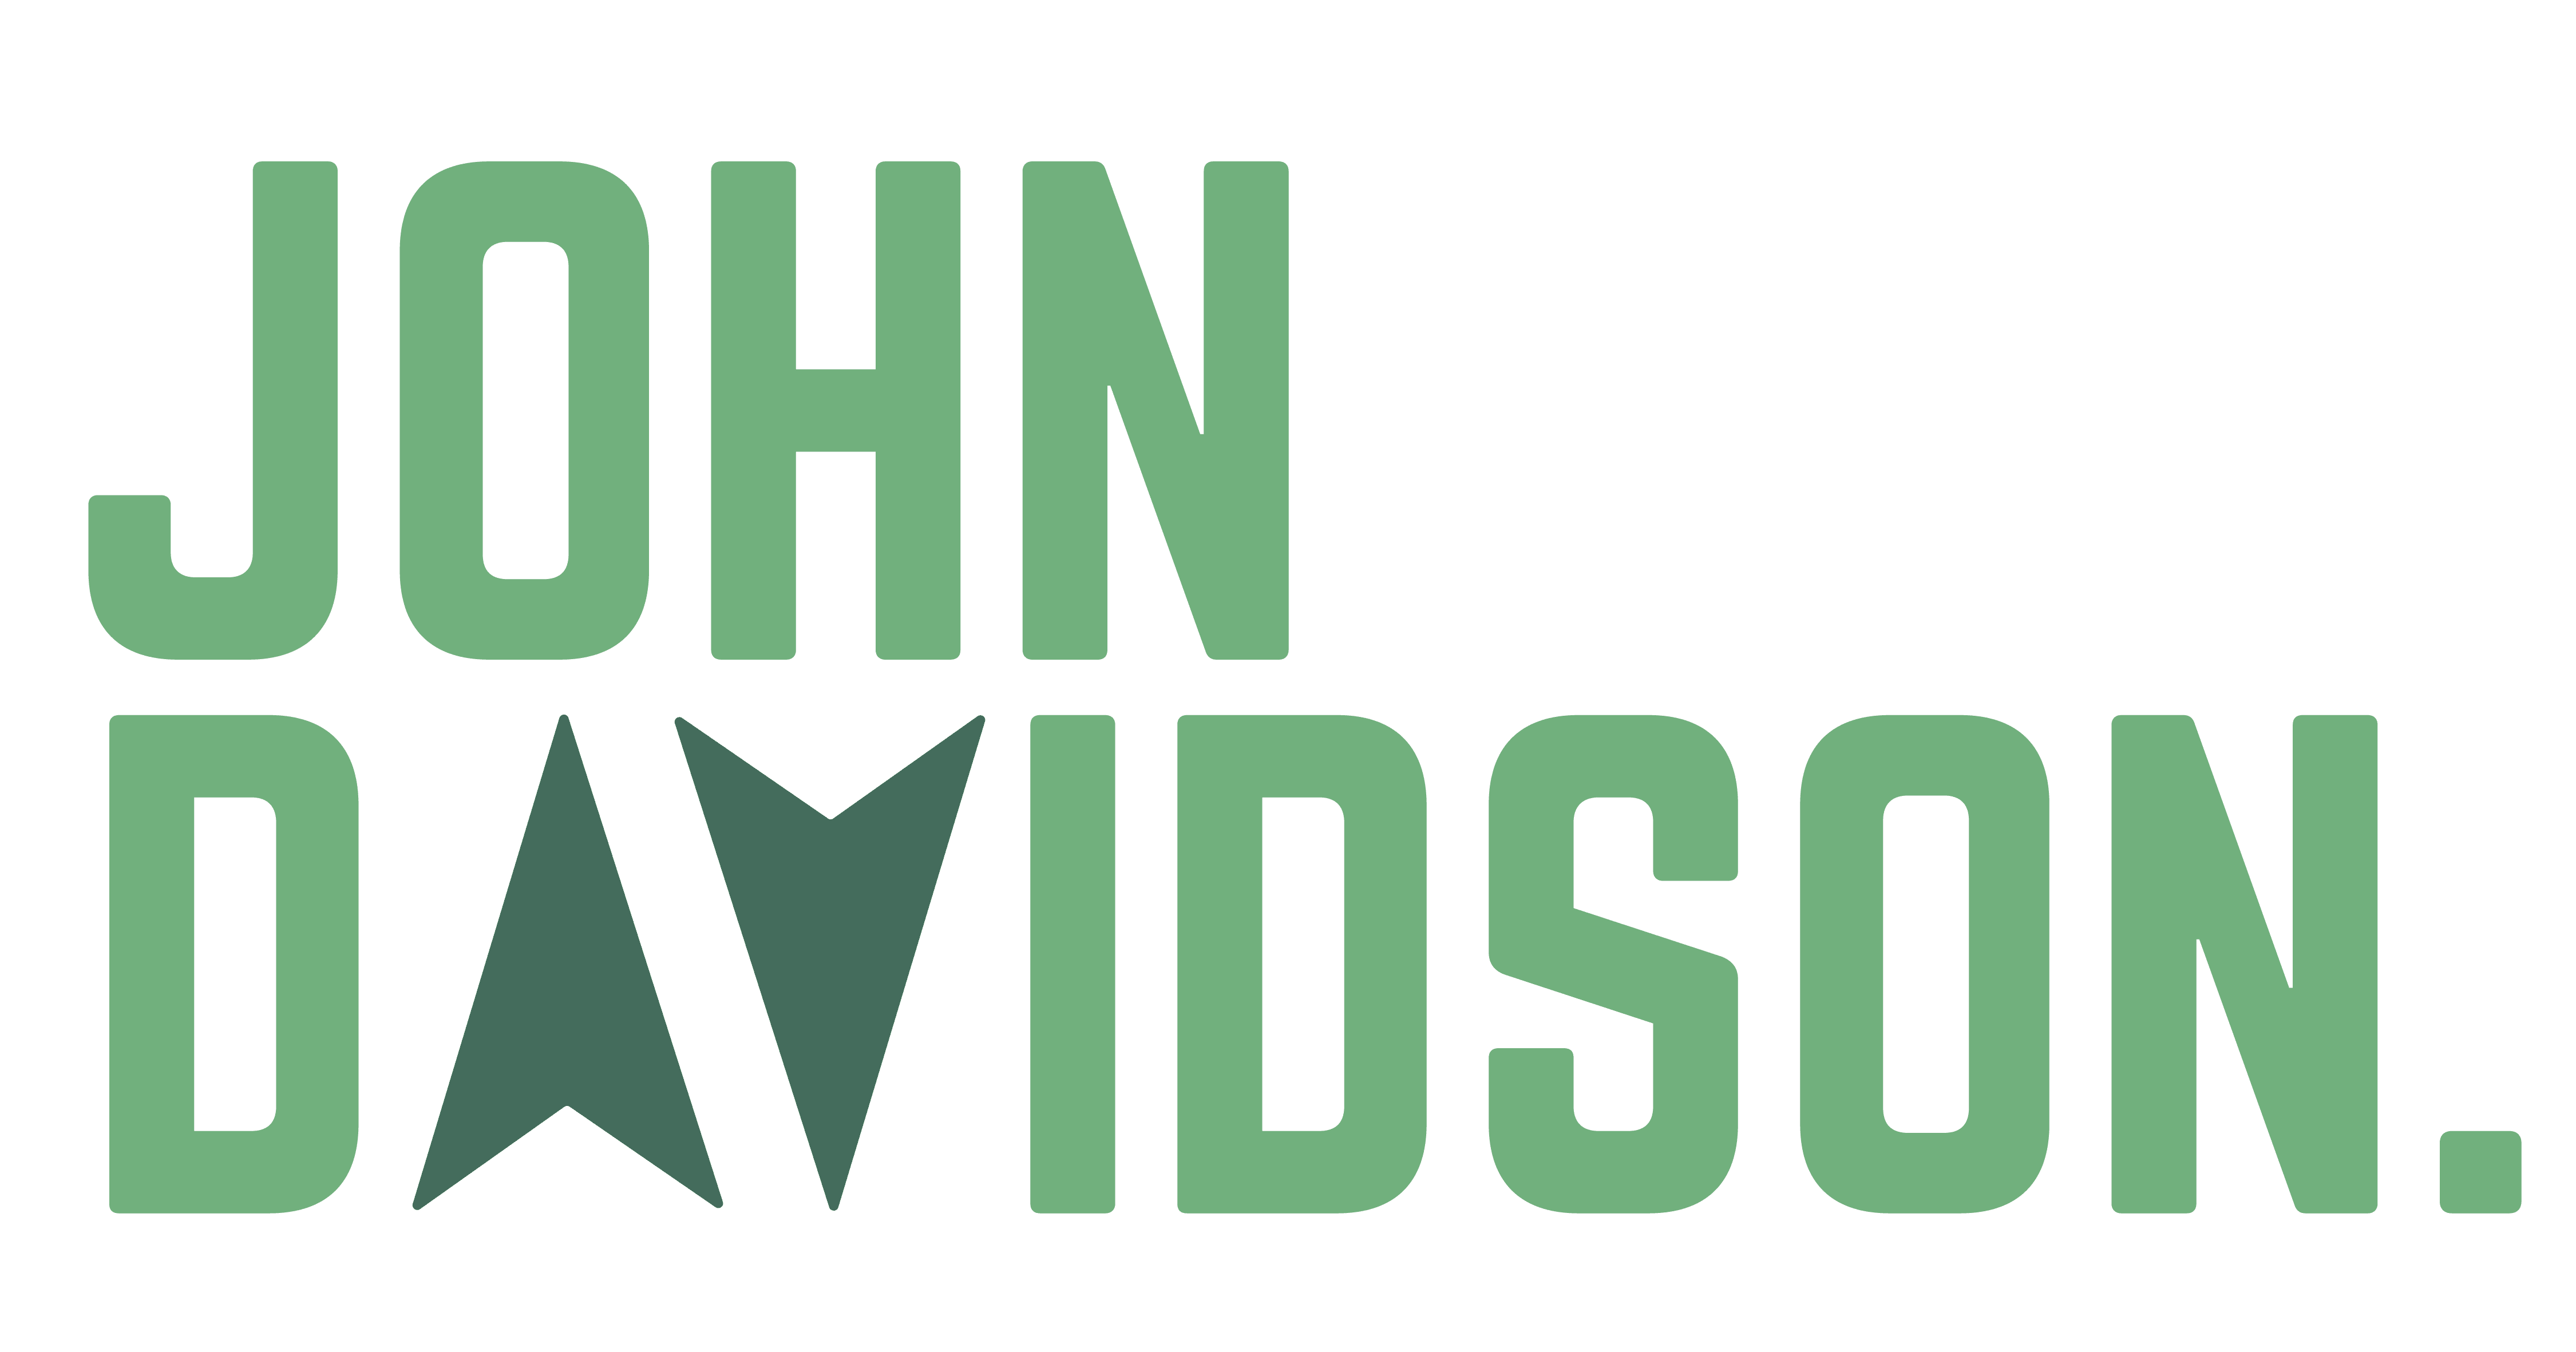 John Davidson